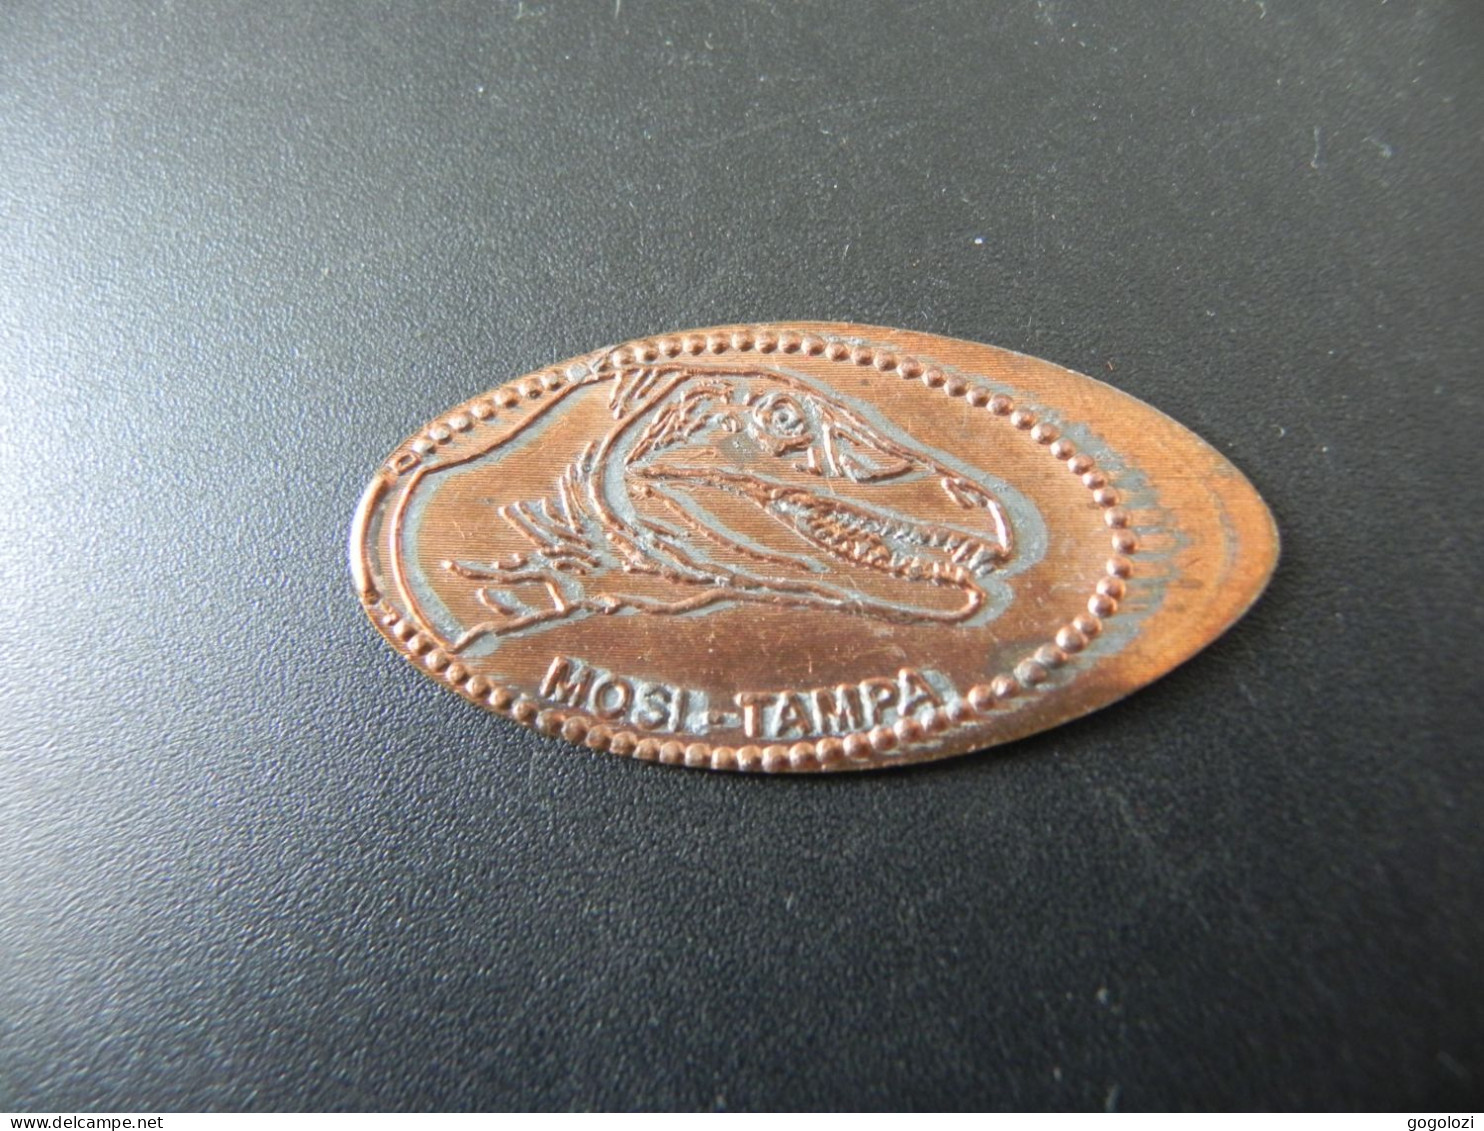 Jeton Token - Elongated Cent - USA - Mosi Tampa - Souvenir-Medaille (elongated Coins)